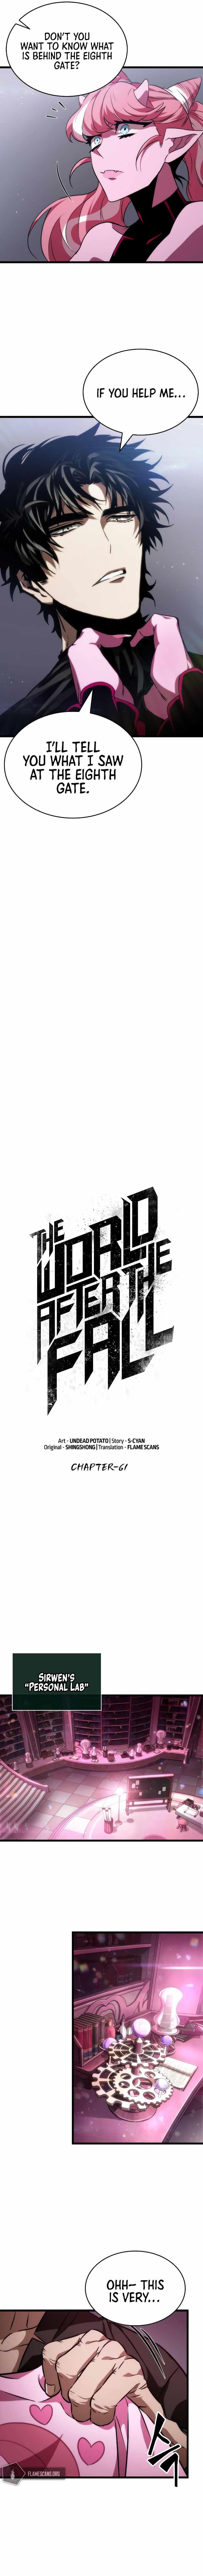 The World After The Fall Chapter 61 page 5 - Mangakakalot